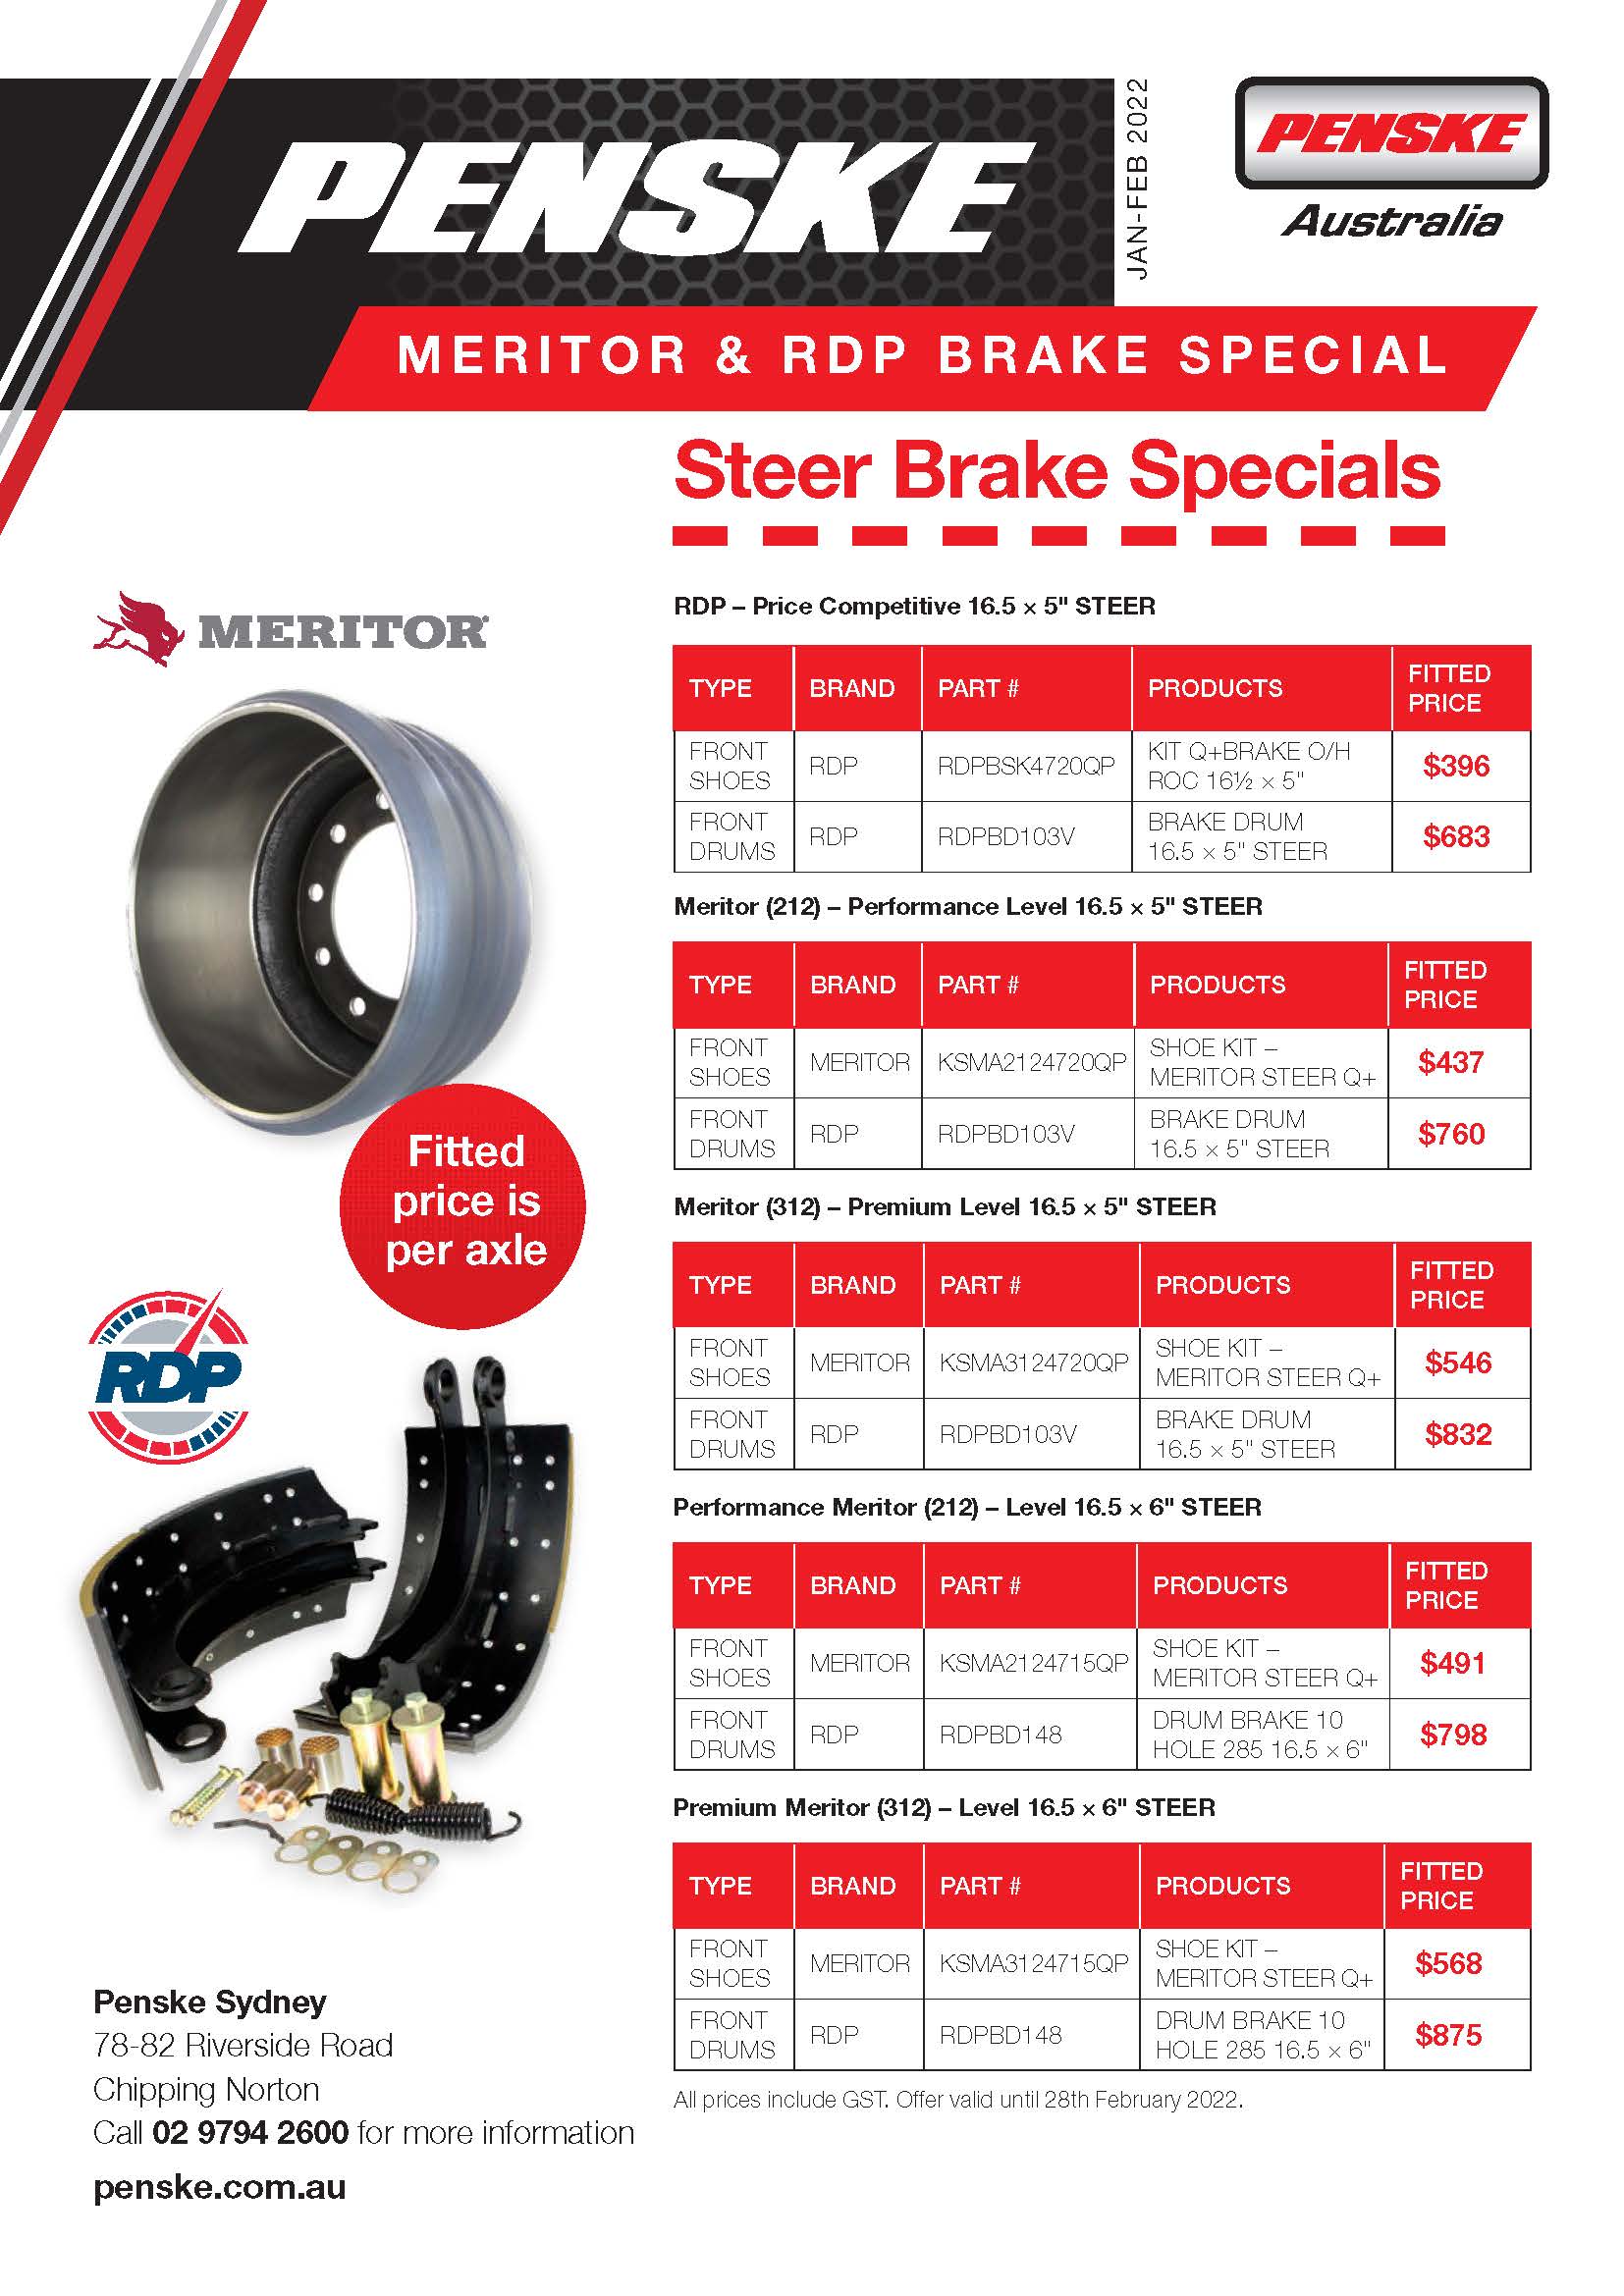 MERITOR & RDP Brake Special